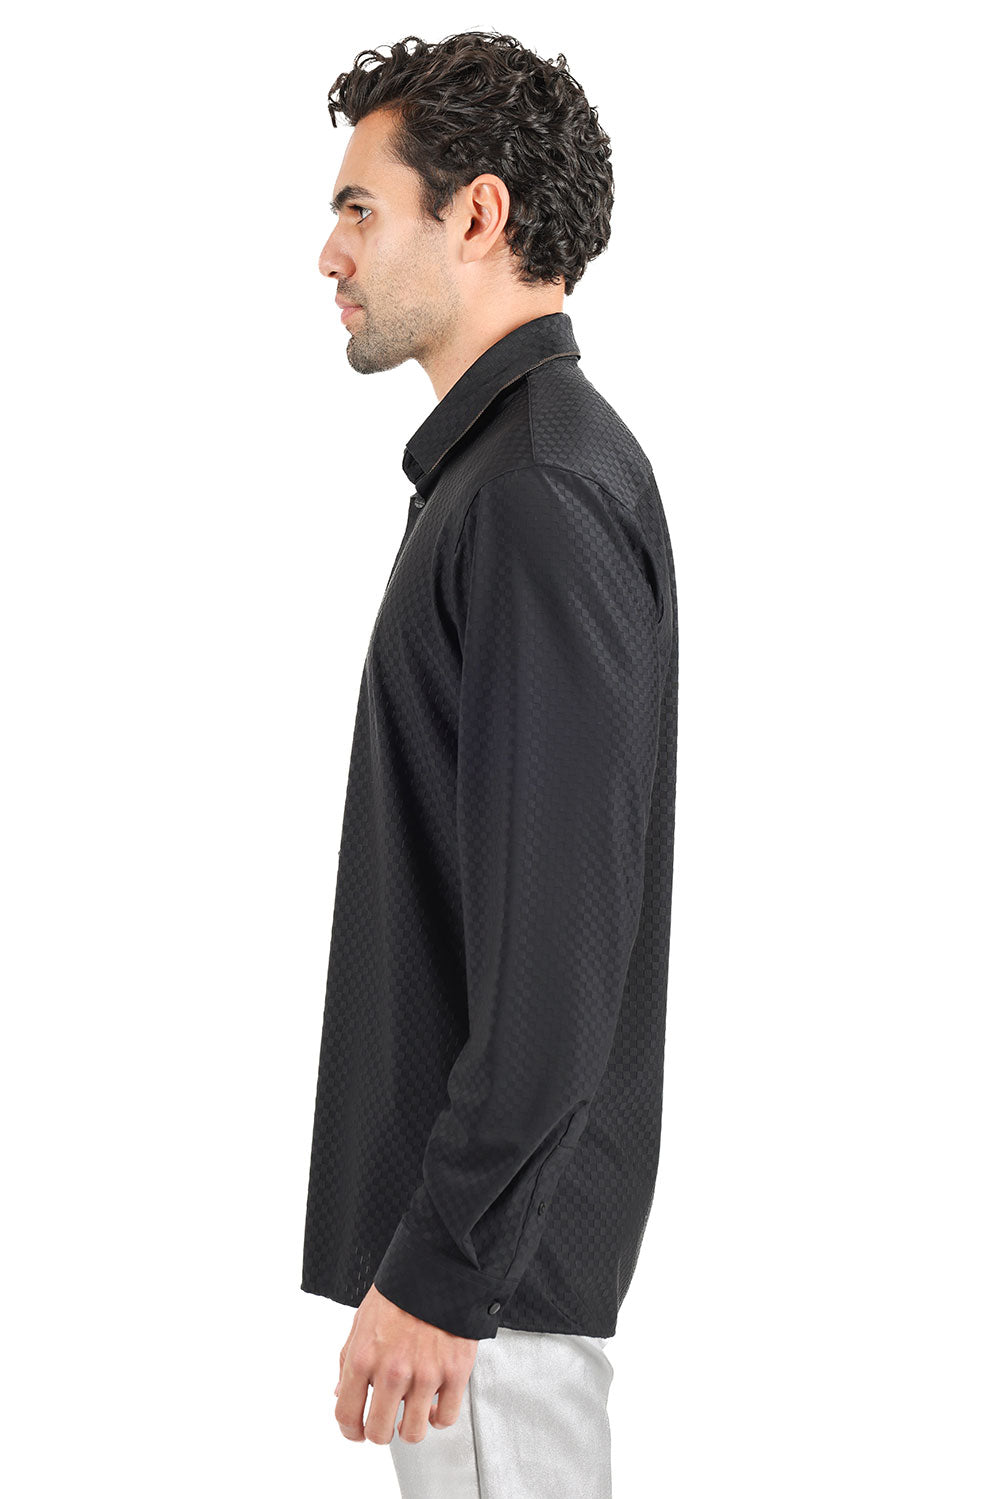 Barabas Men's Premium Solid No Stitches Long Sleeves Shirts 2B403 Black